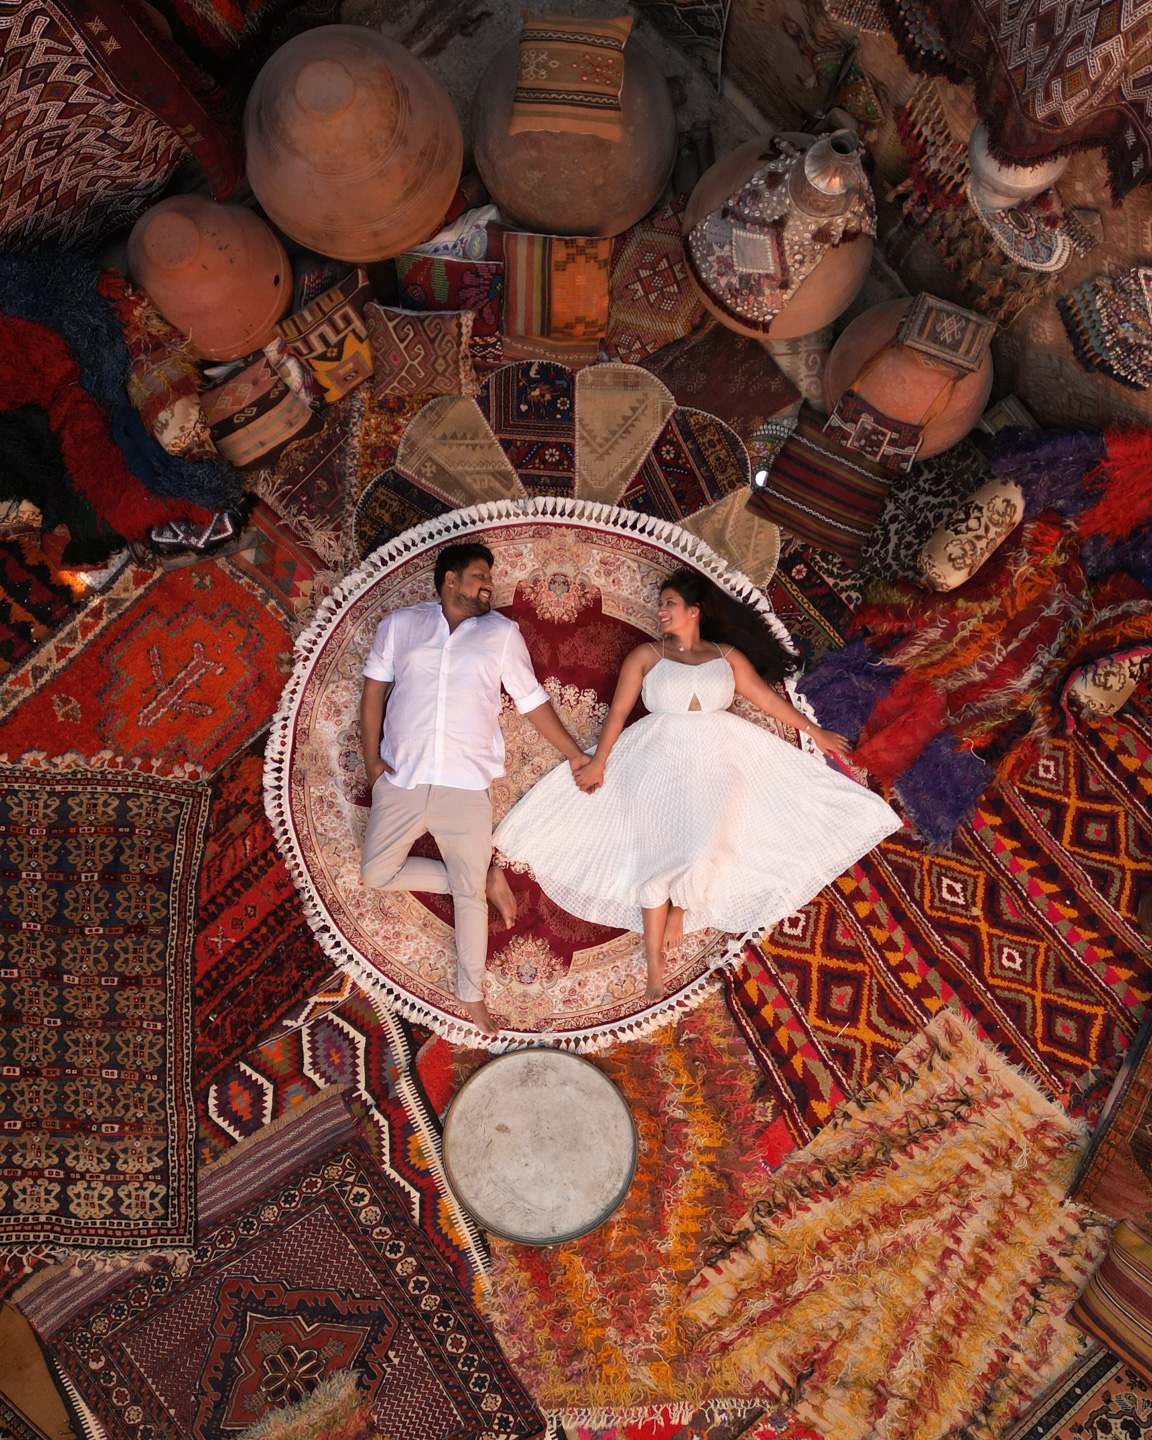 Carpet shop in Cappadocia